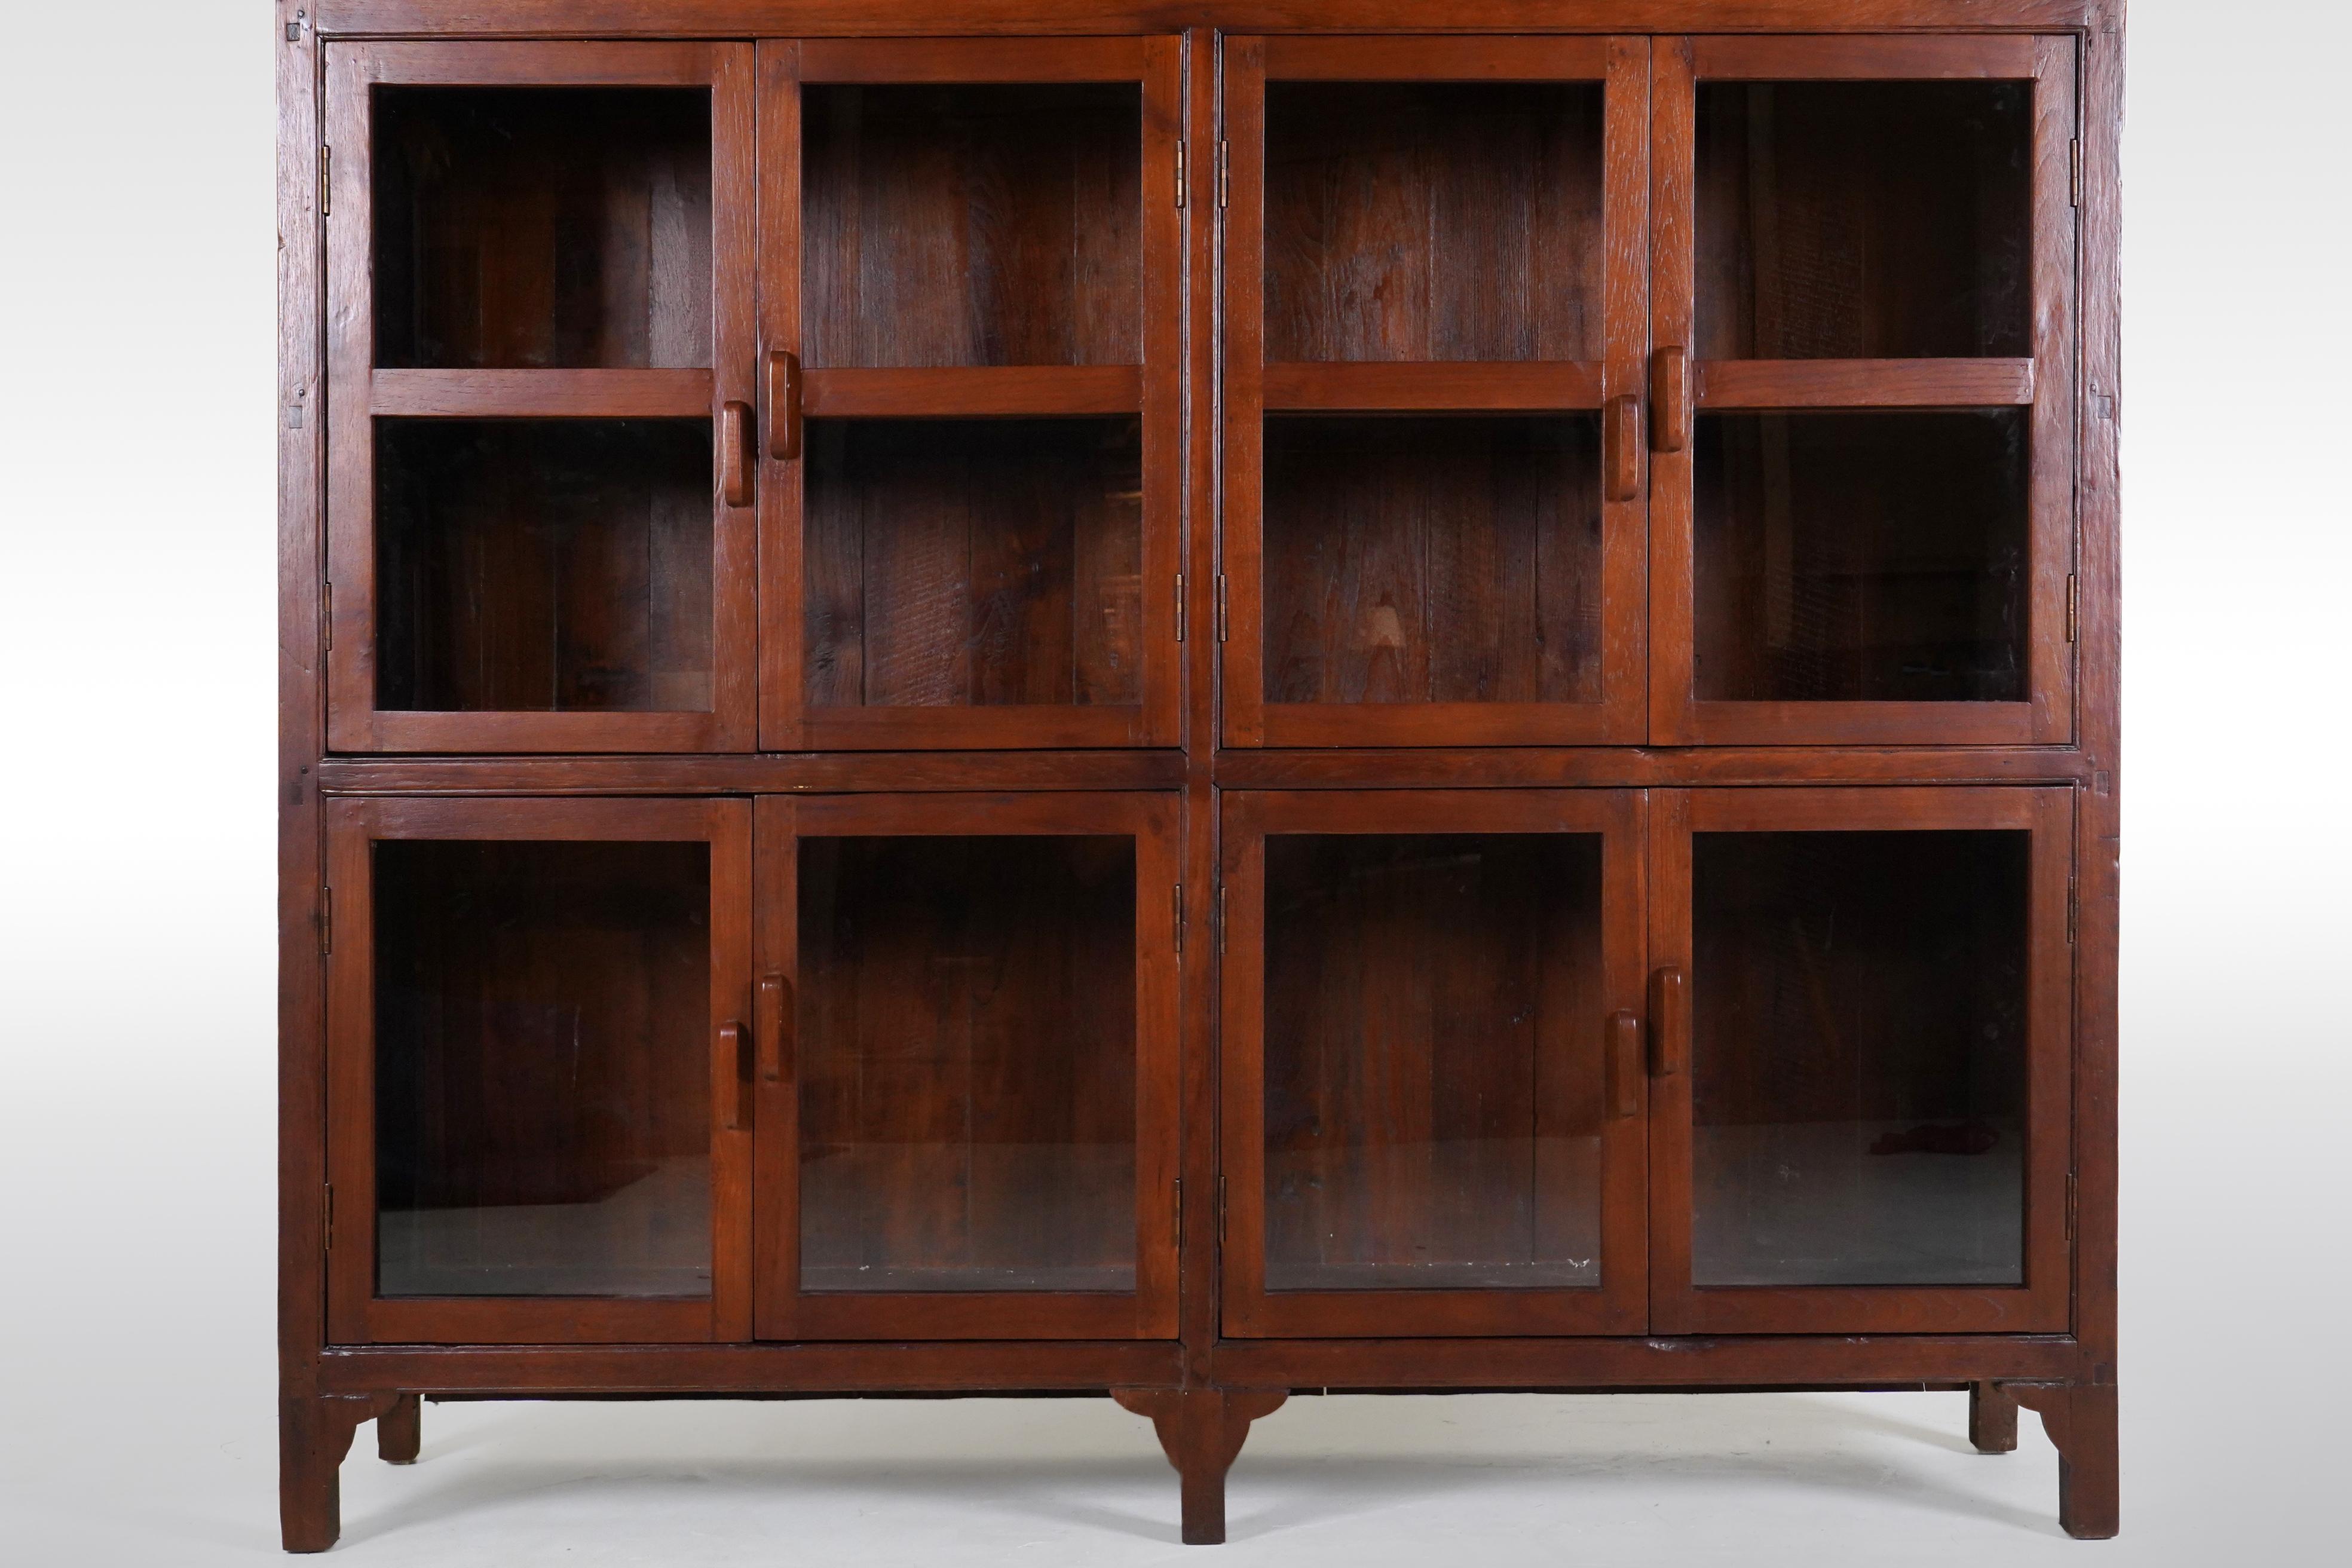 A British Colonial Teak Wood Bookcase 6